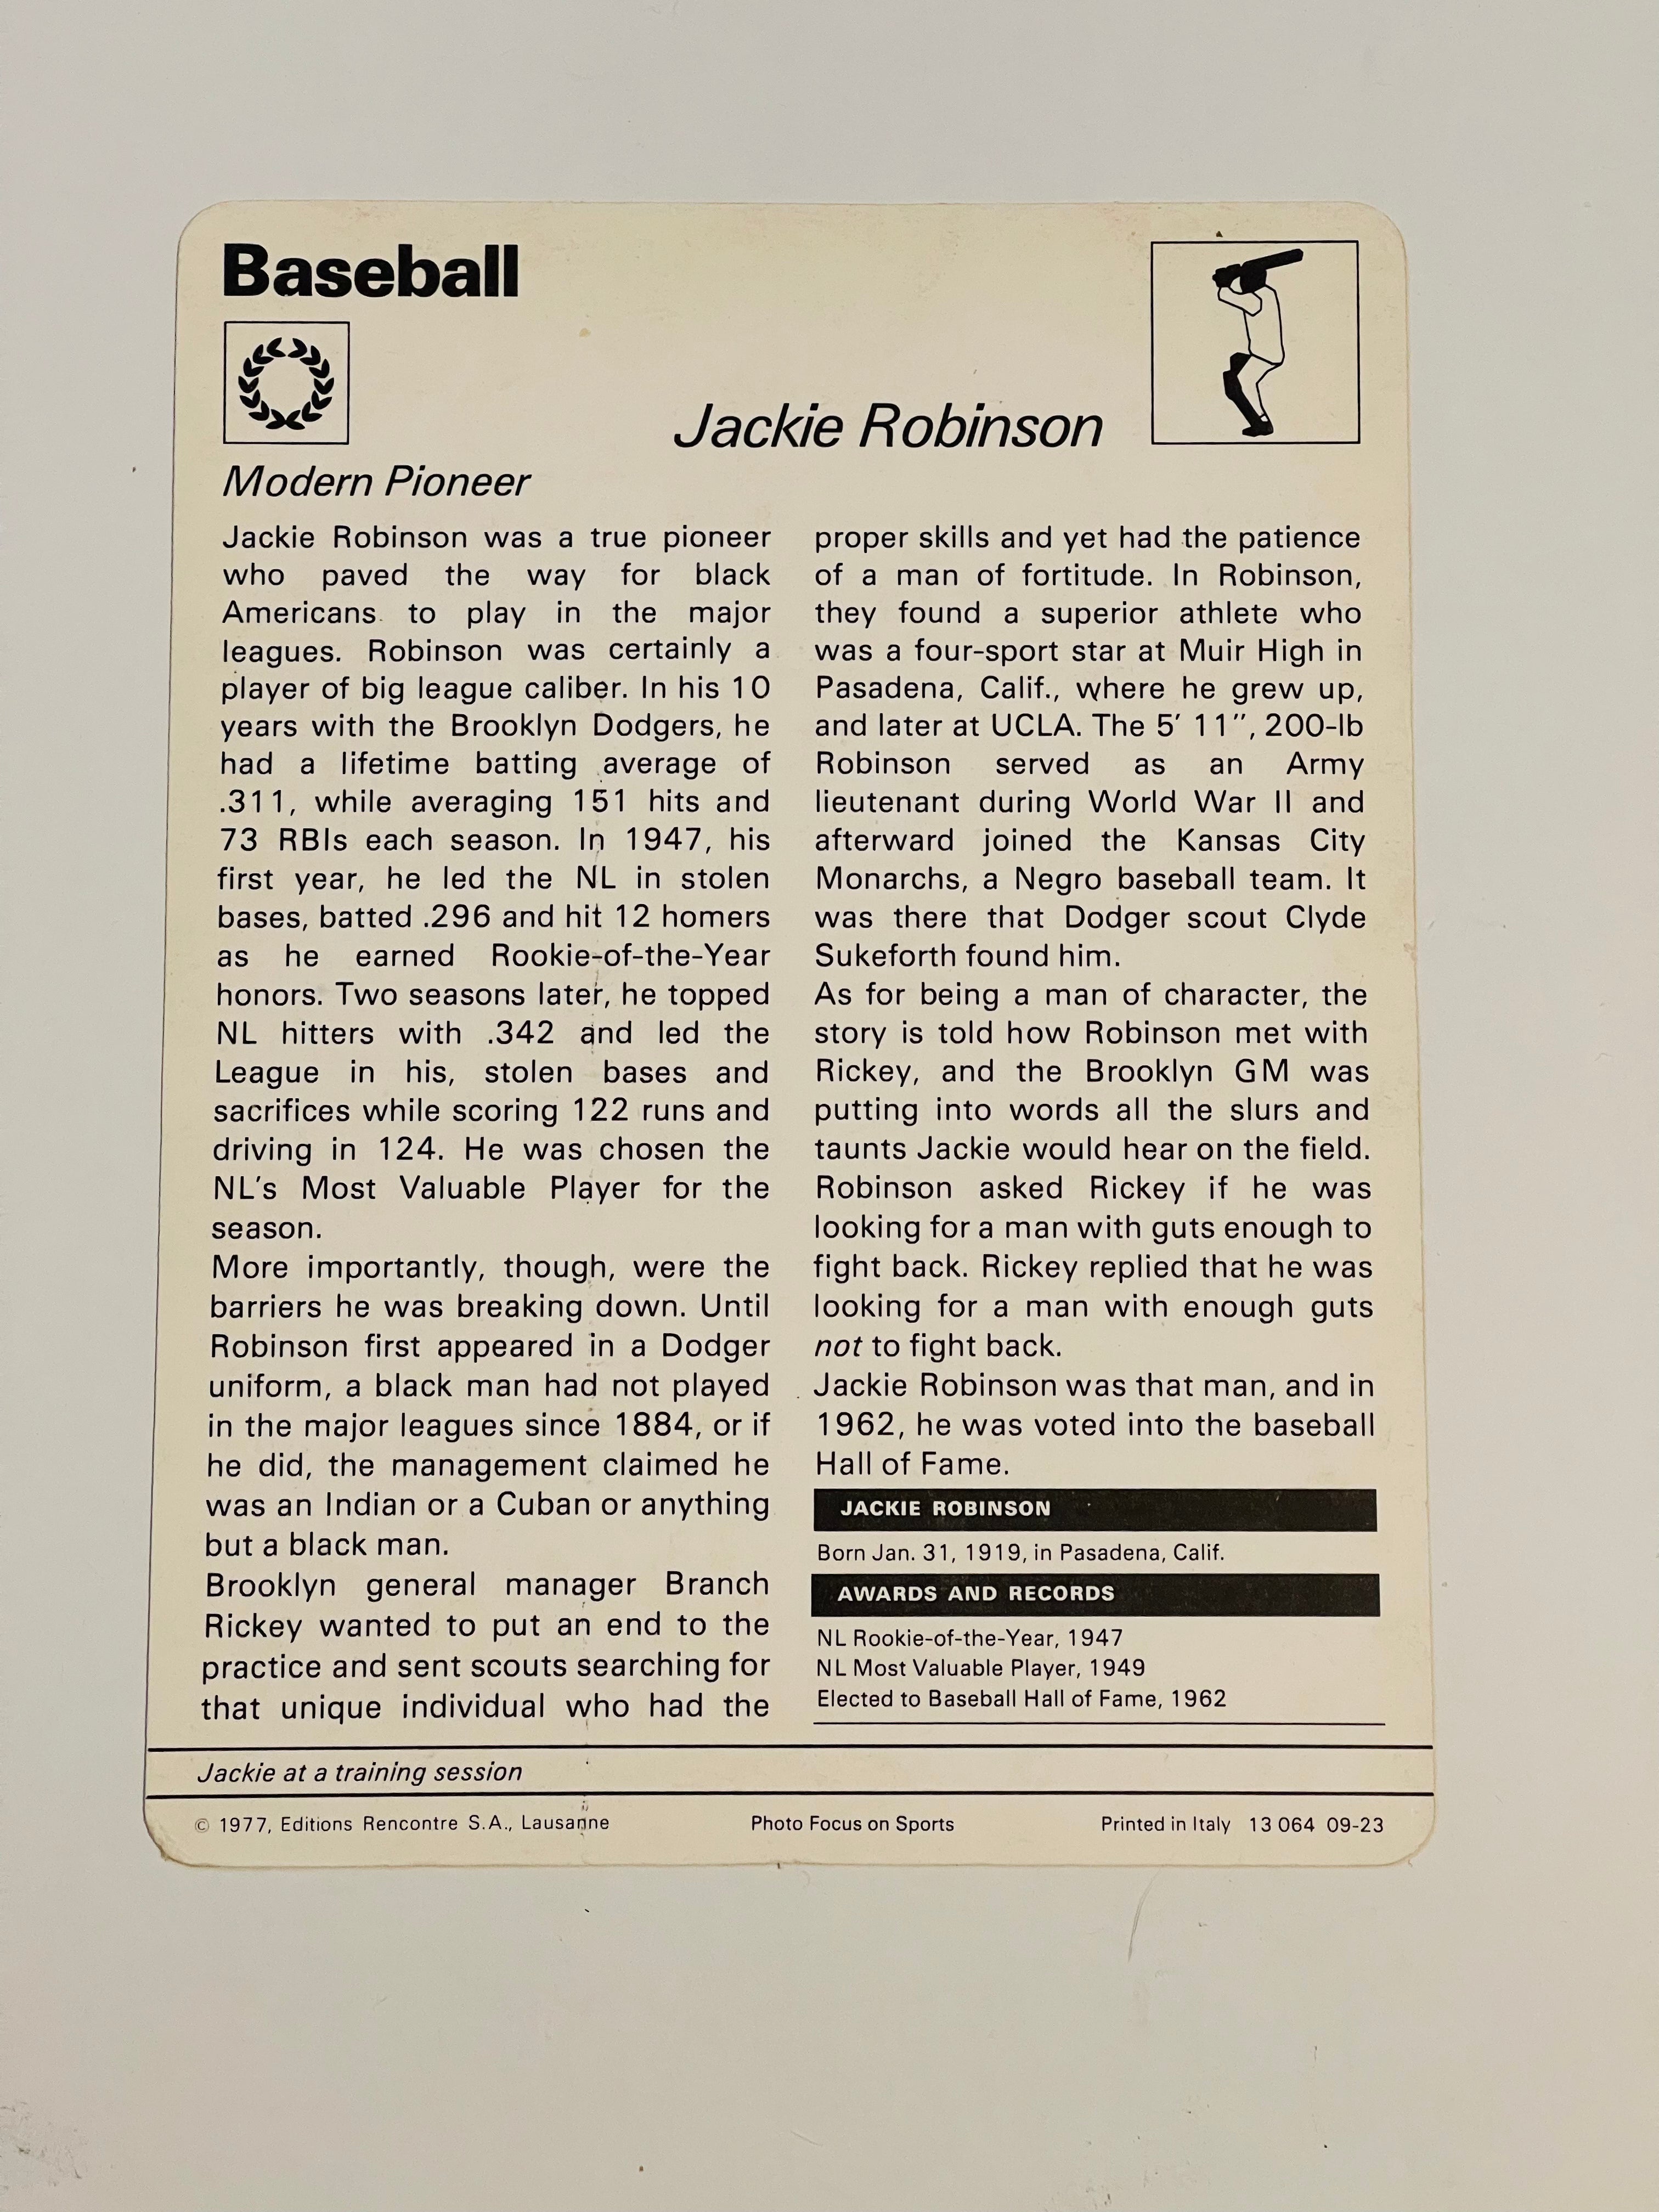 Jackie Robinson rare 5x7 baseball card printed in Italy 1977